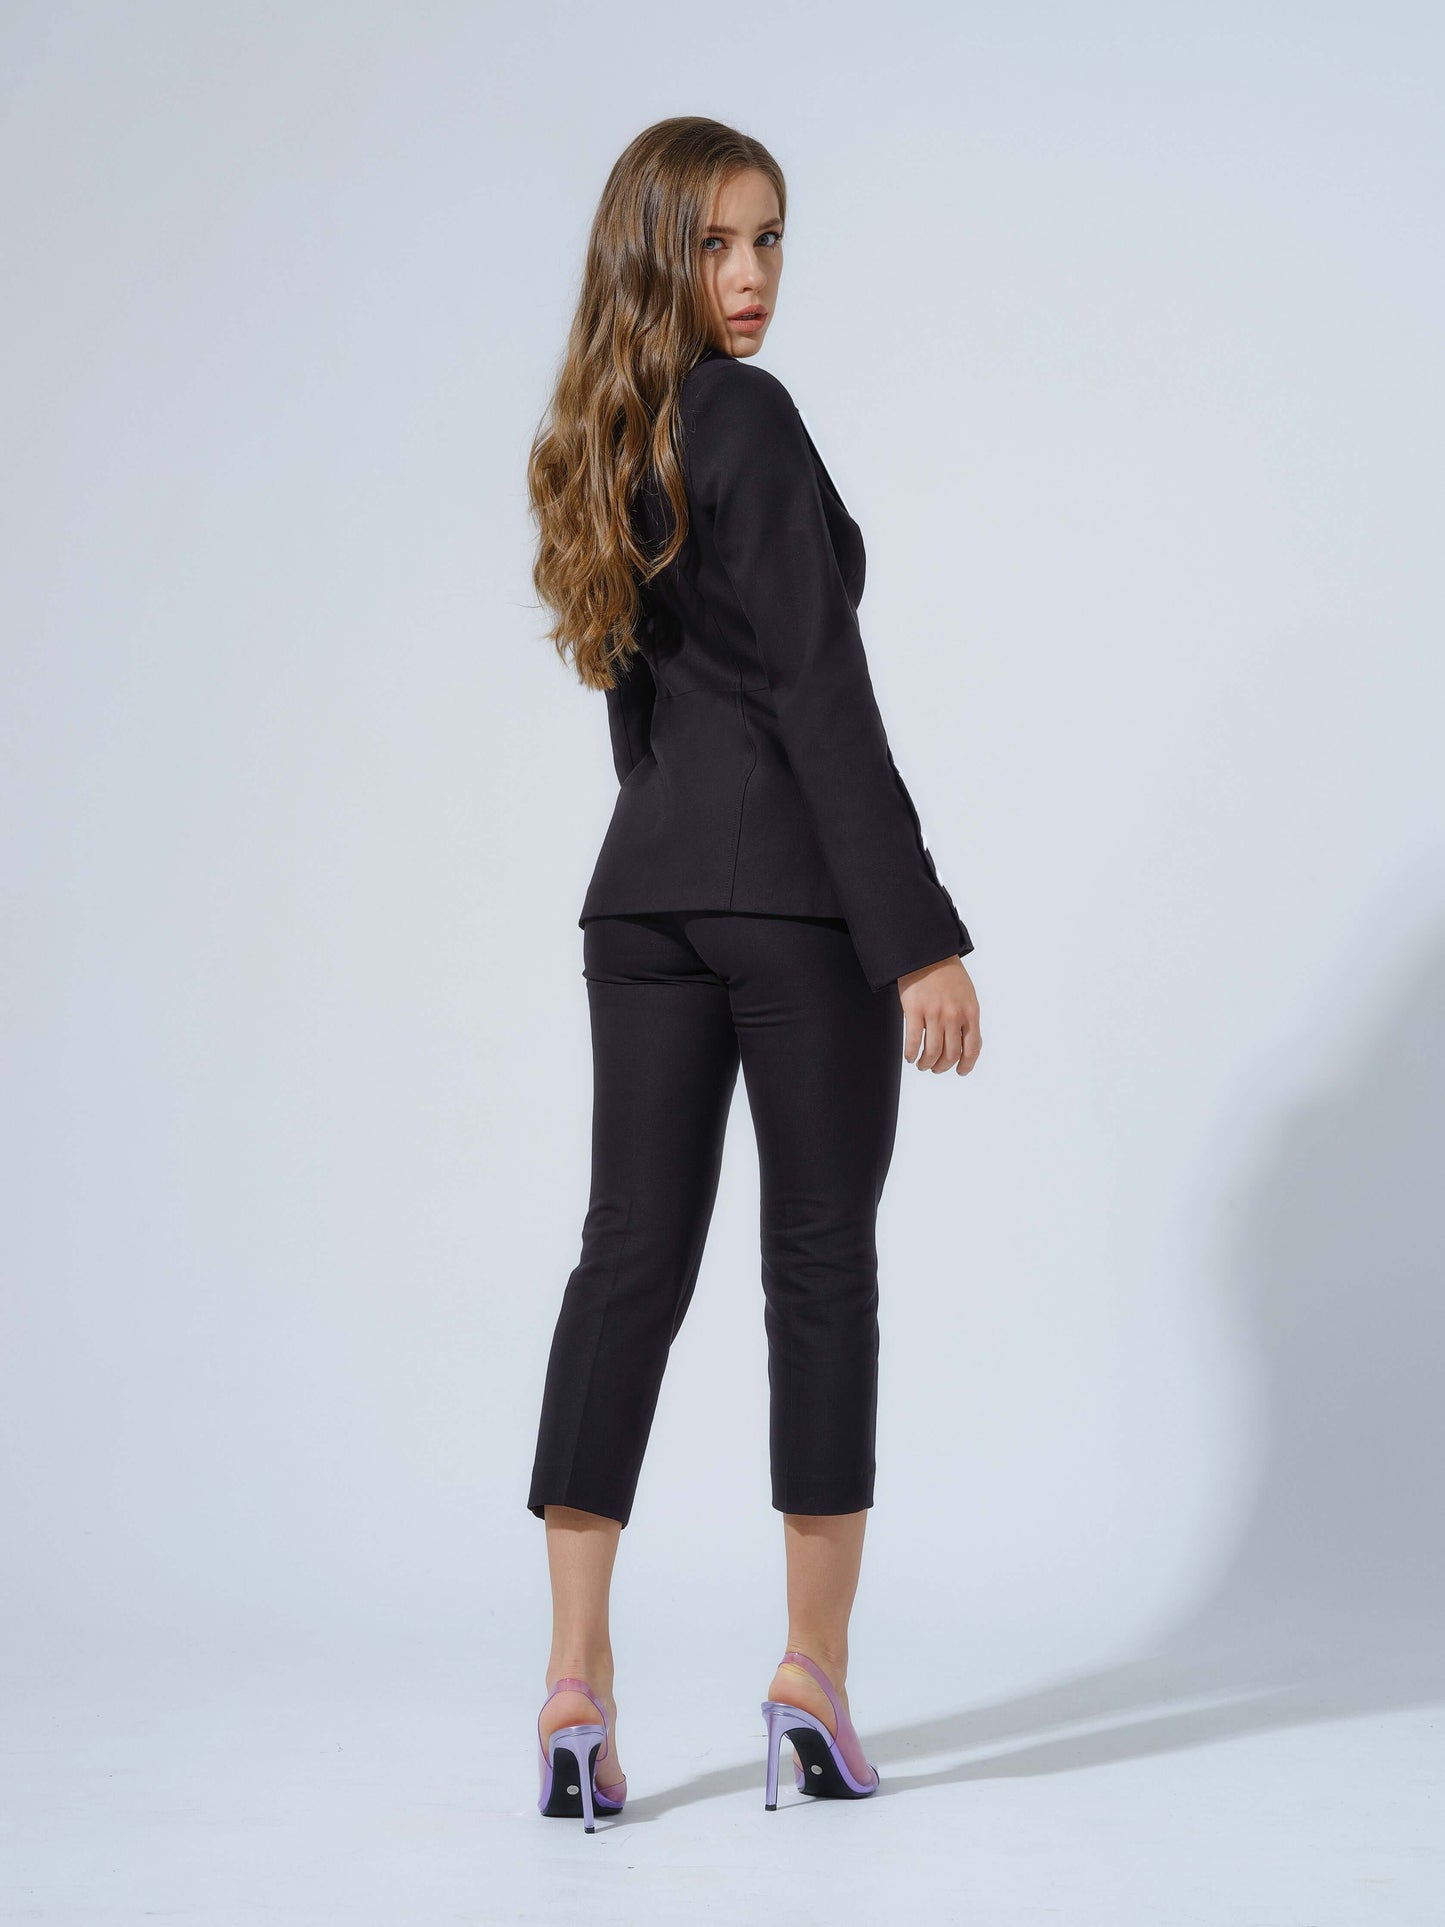 Chic Impressions Asymmetric Blazer - Black & White by Tia Dorraine Women's Luxury Fashion Designer Clothing Brand